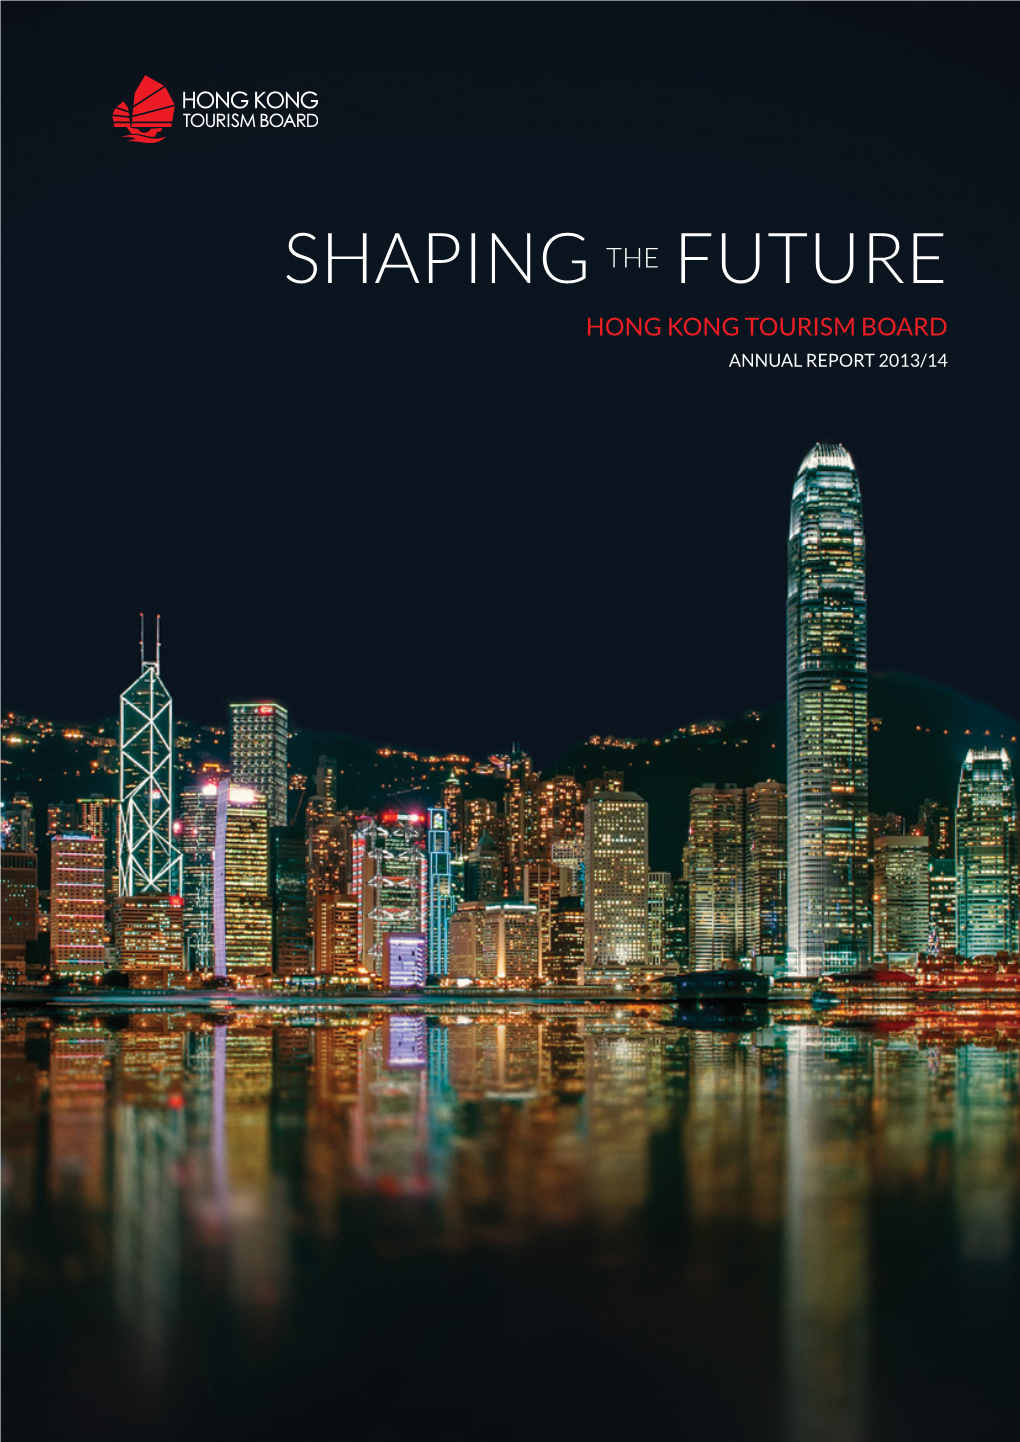 Hong Kong Tourism Board Annual Report 2013/14